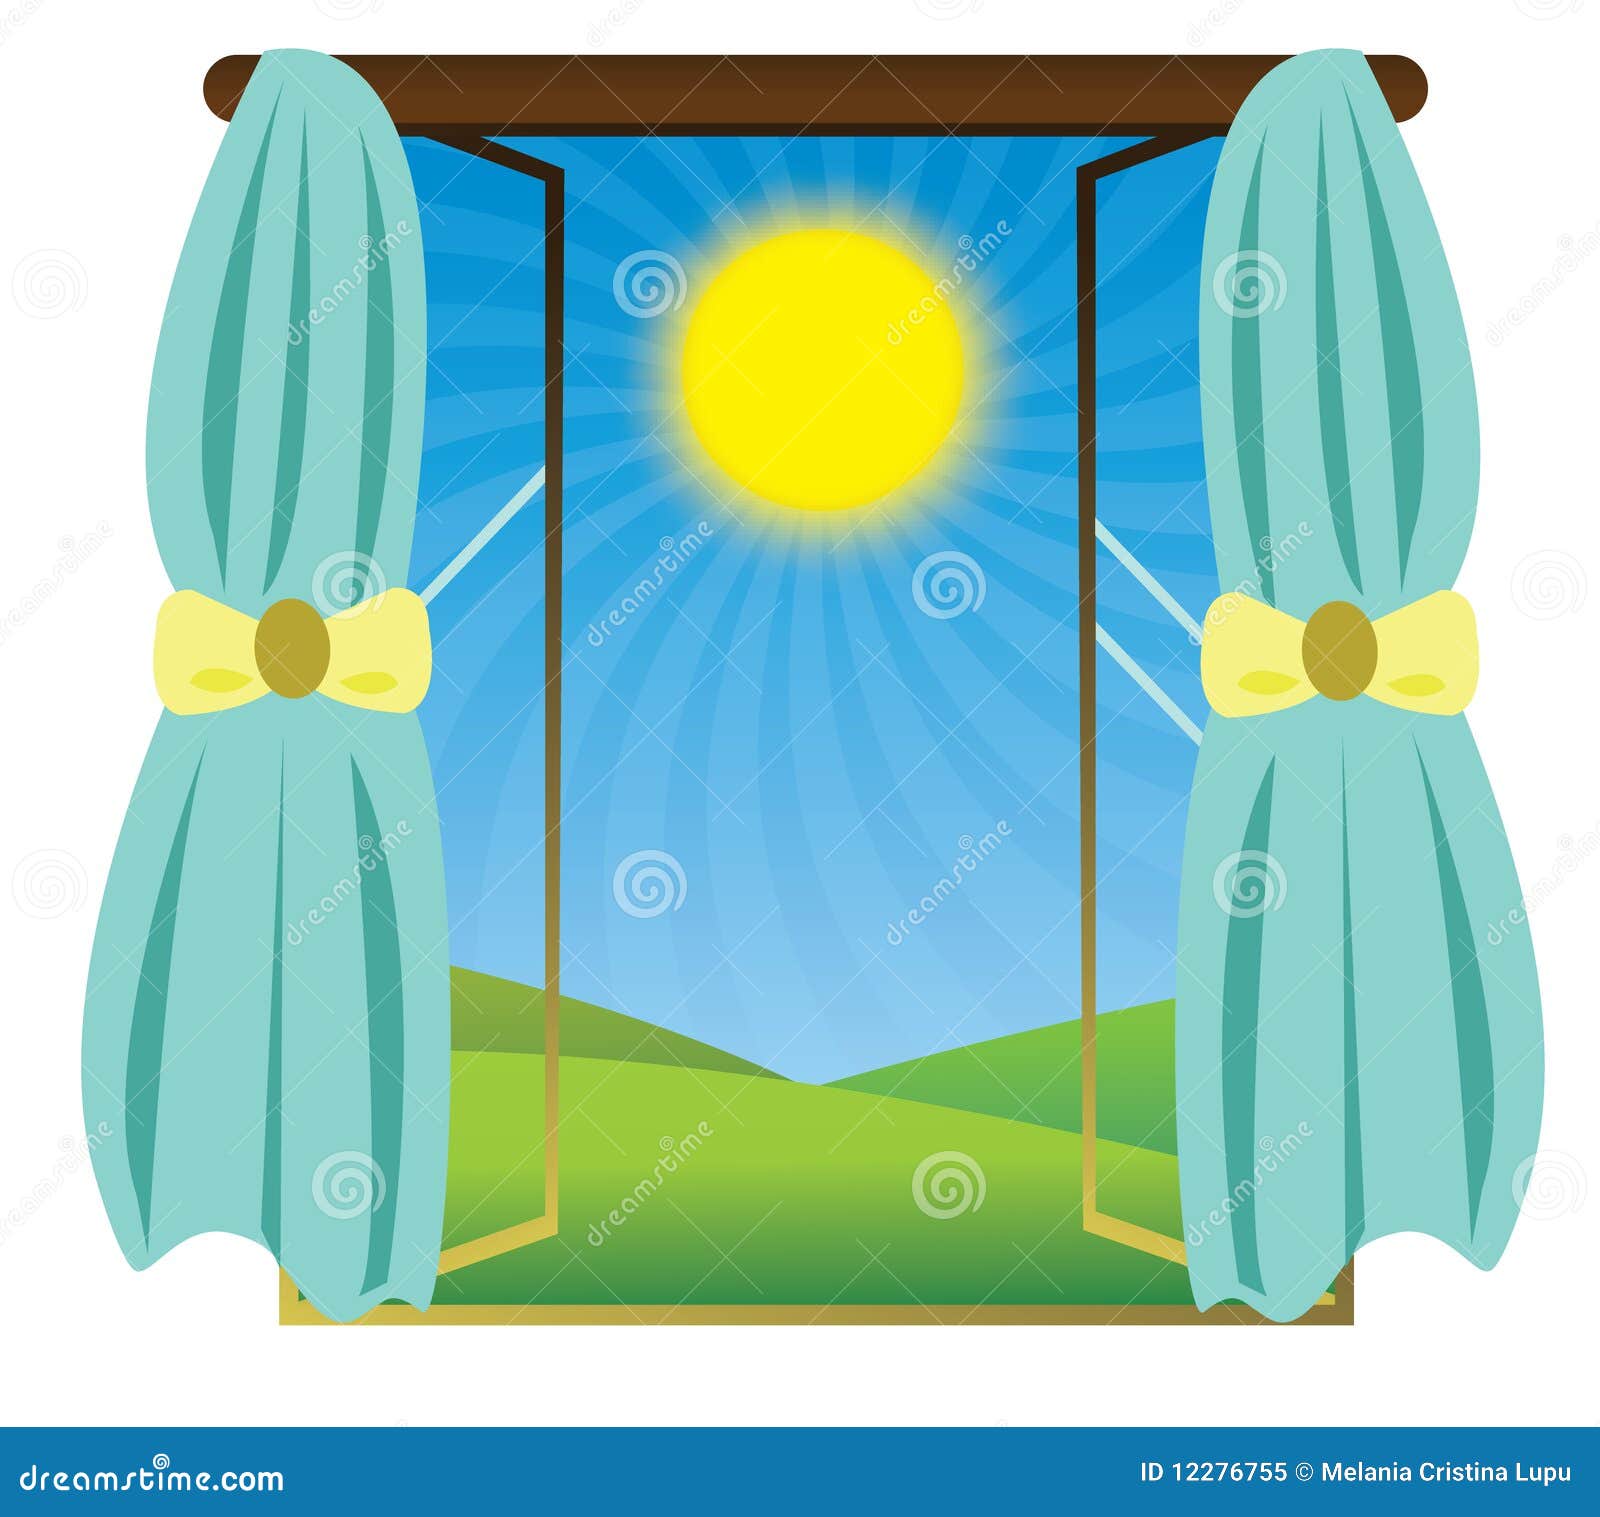 windows clip art animation - photo #41